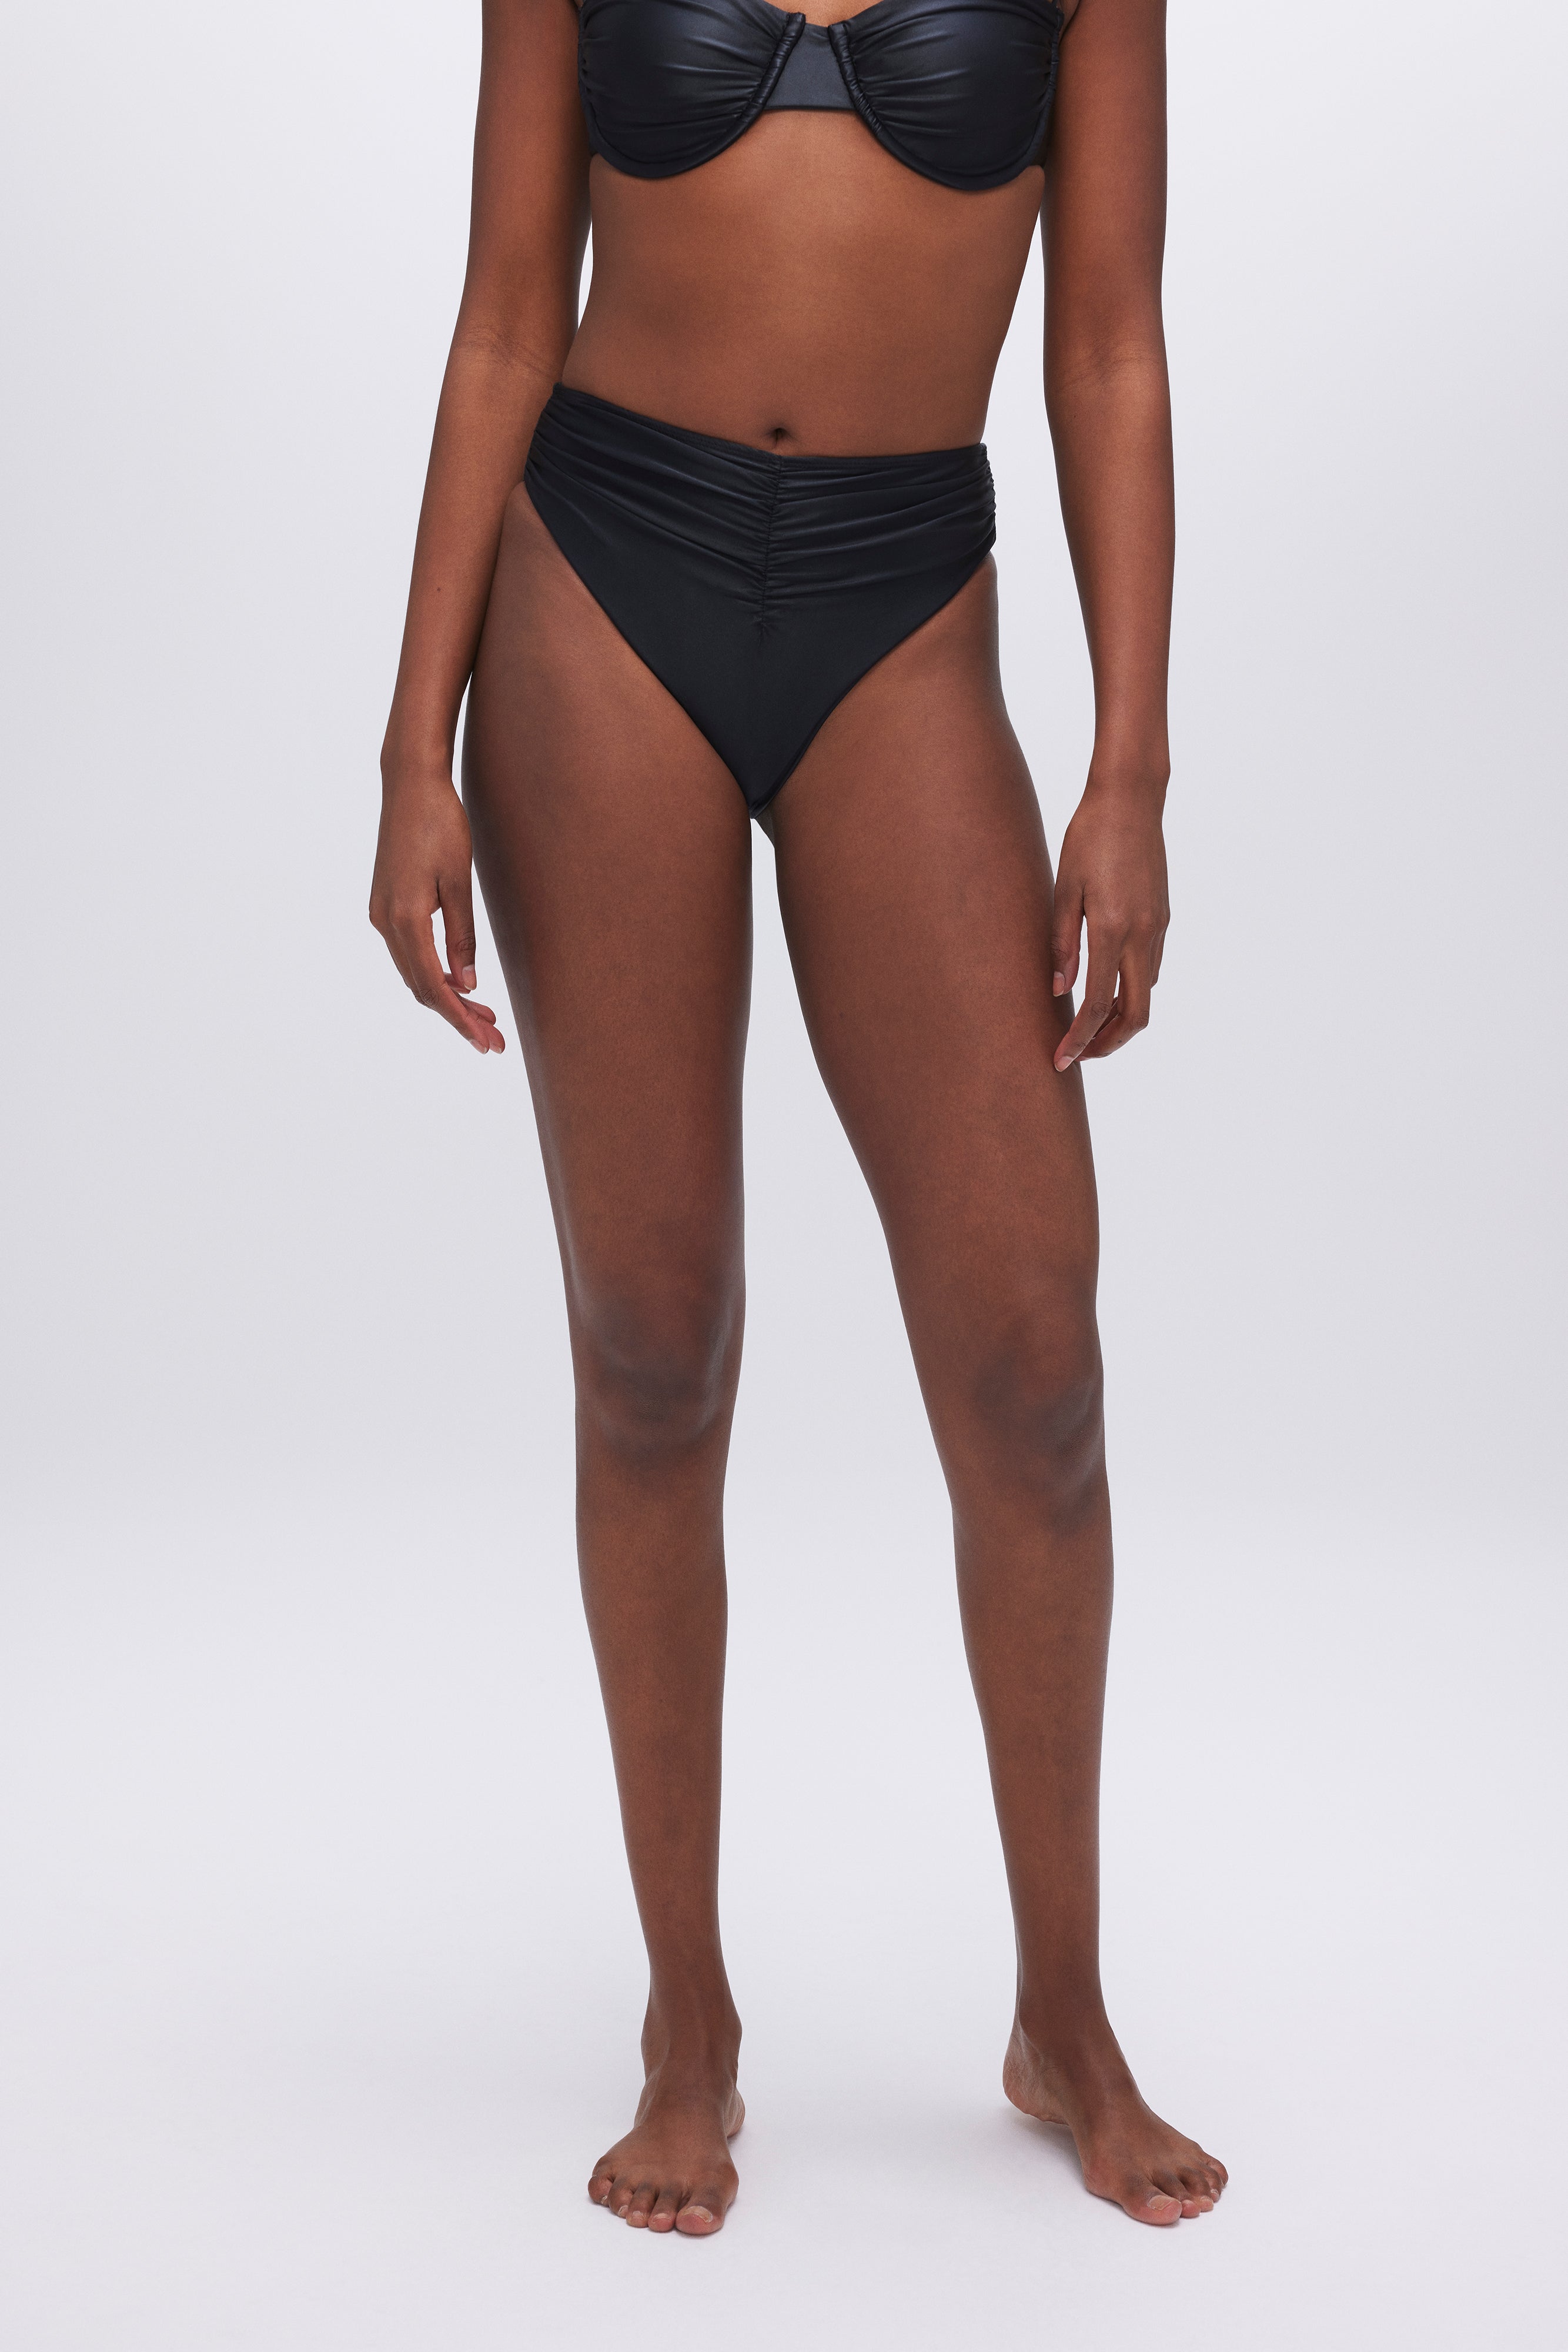 Good American SCULPT BOYSHORT - Bikini bottoms - schwarz/black - Zalando.de